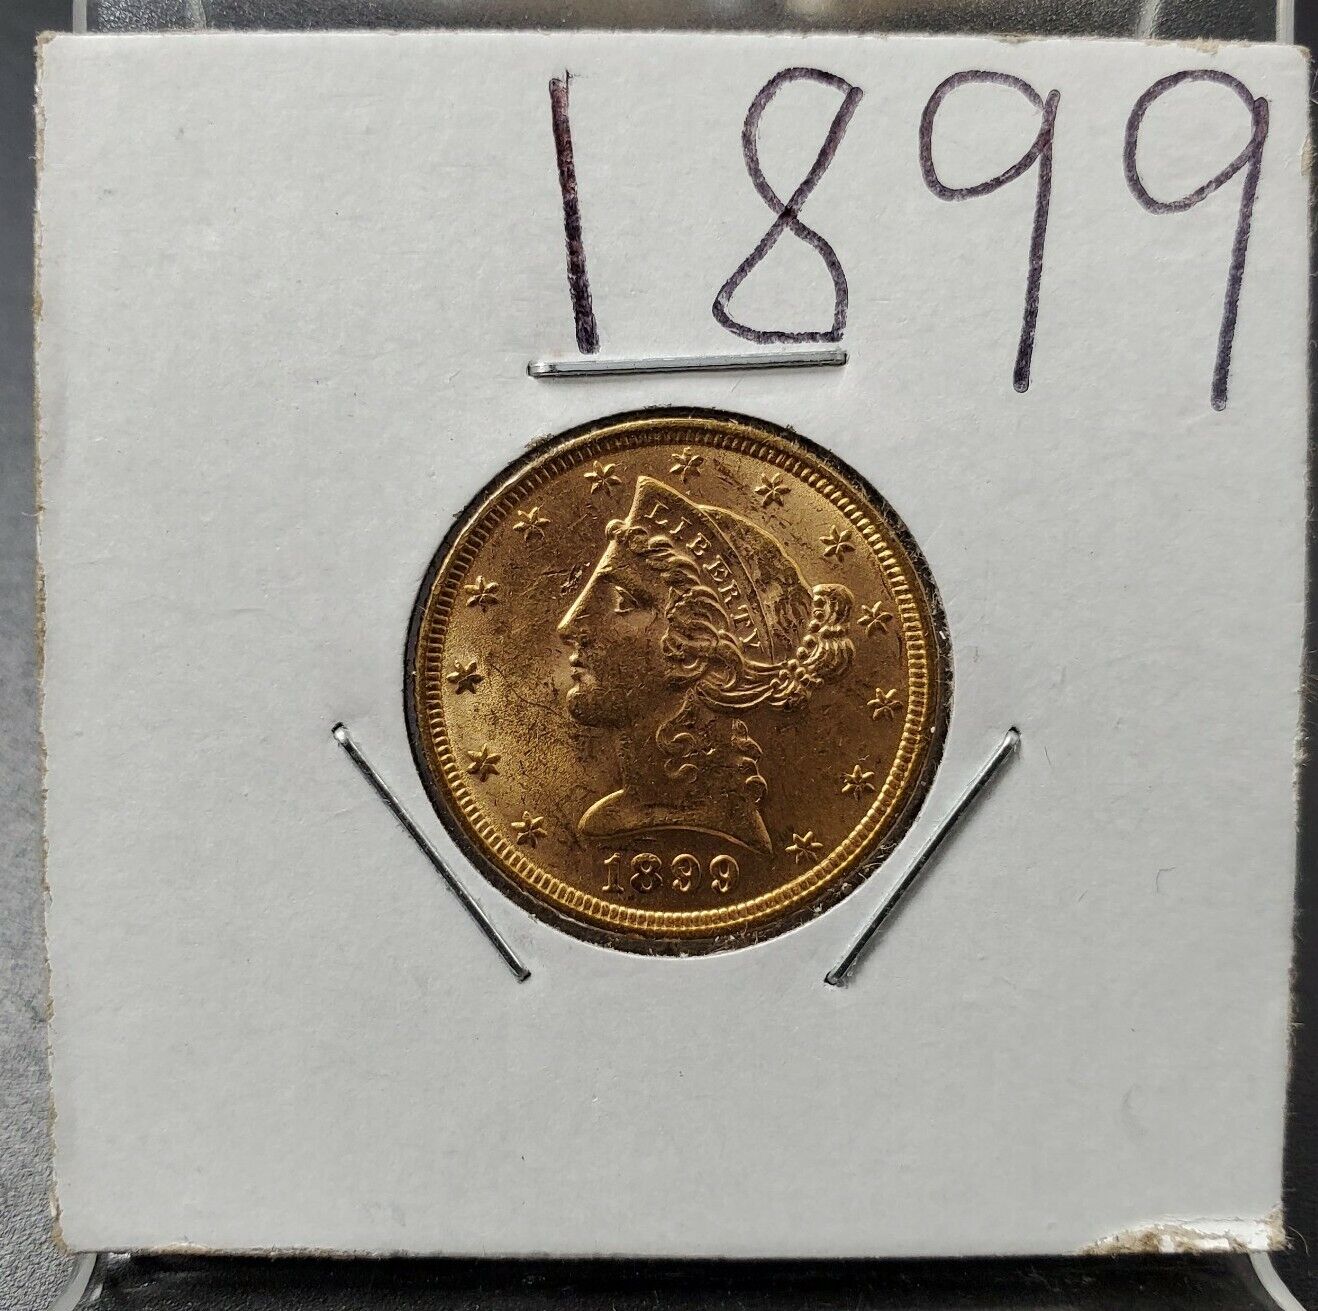 1899 P $5 Liberty Head Half Eagle Reverse US Type Gold Coin CHOICE BU PRE-1933